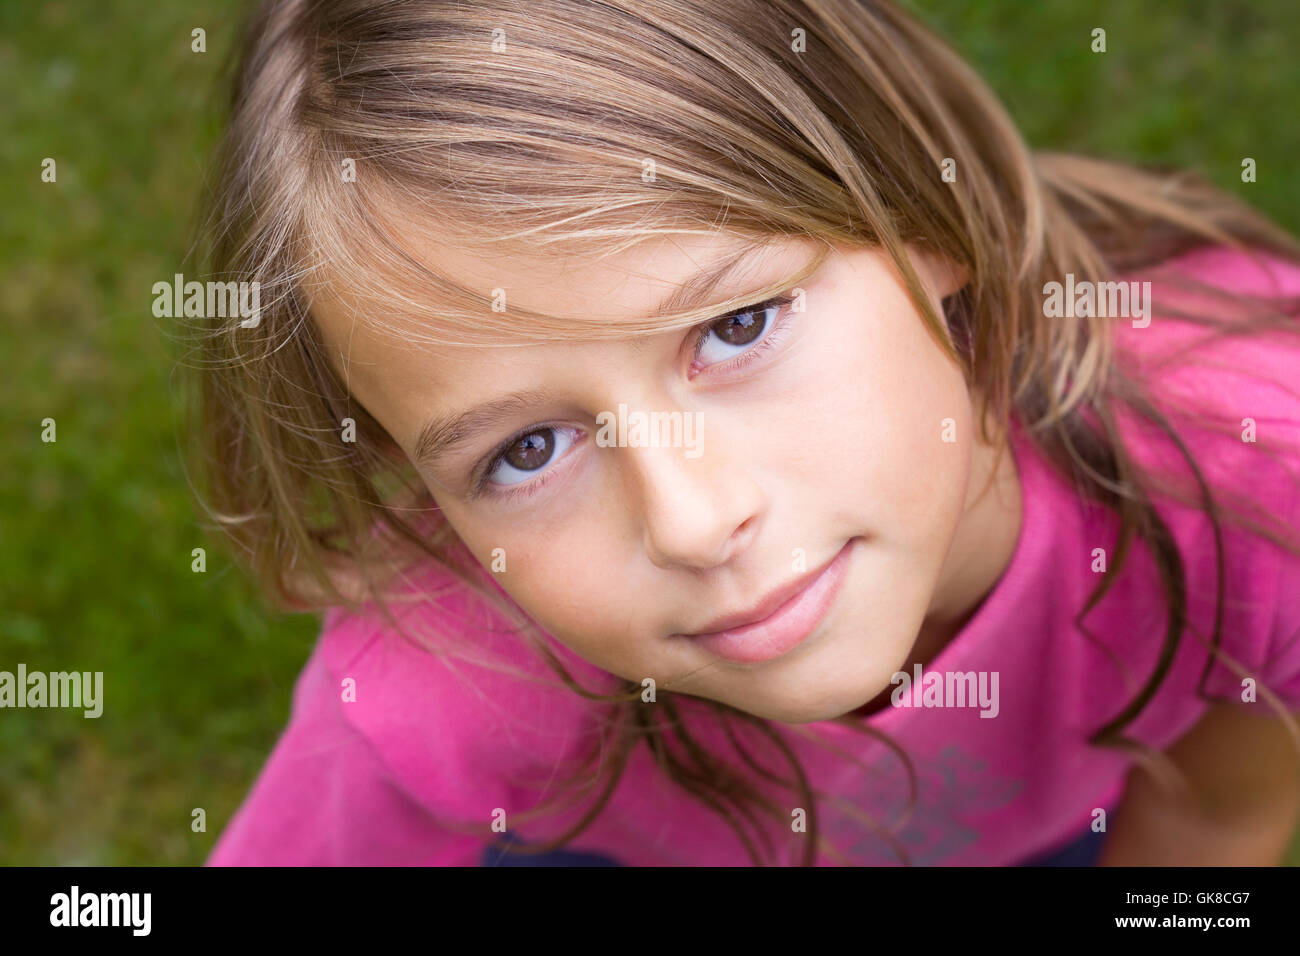 Portrit of smiling girl Stock Photo